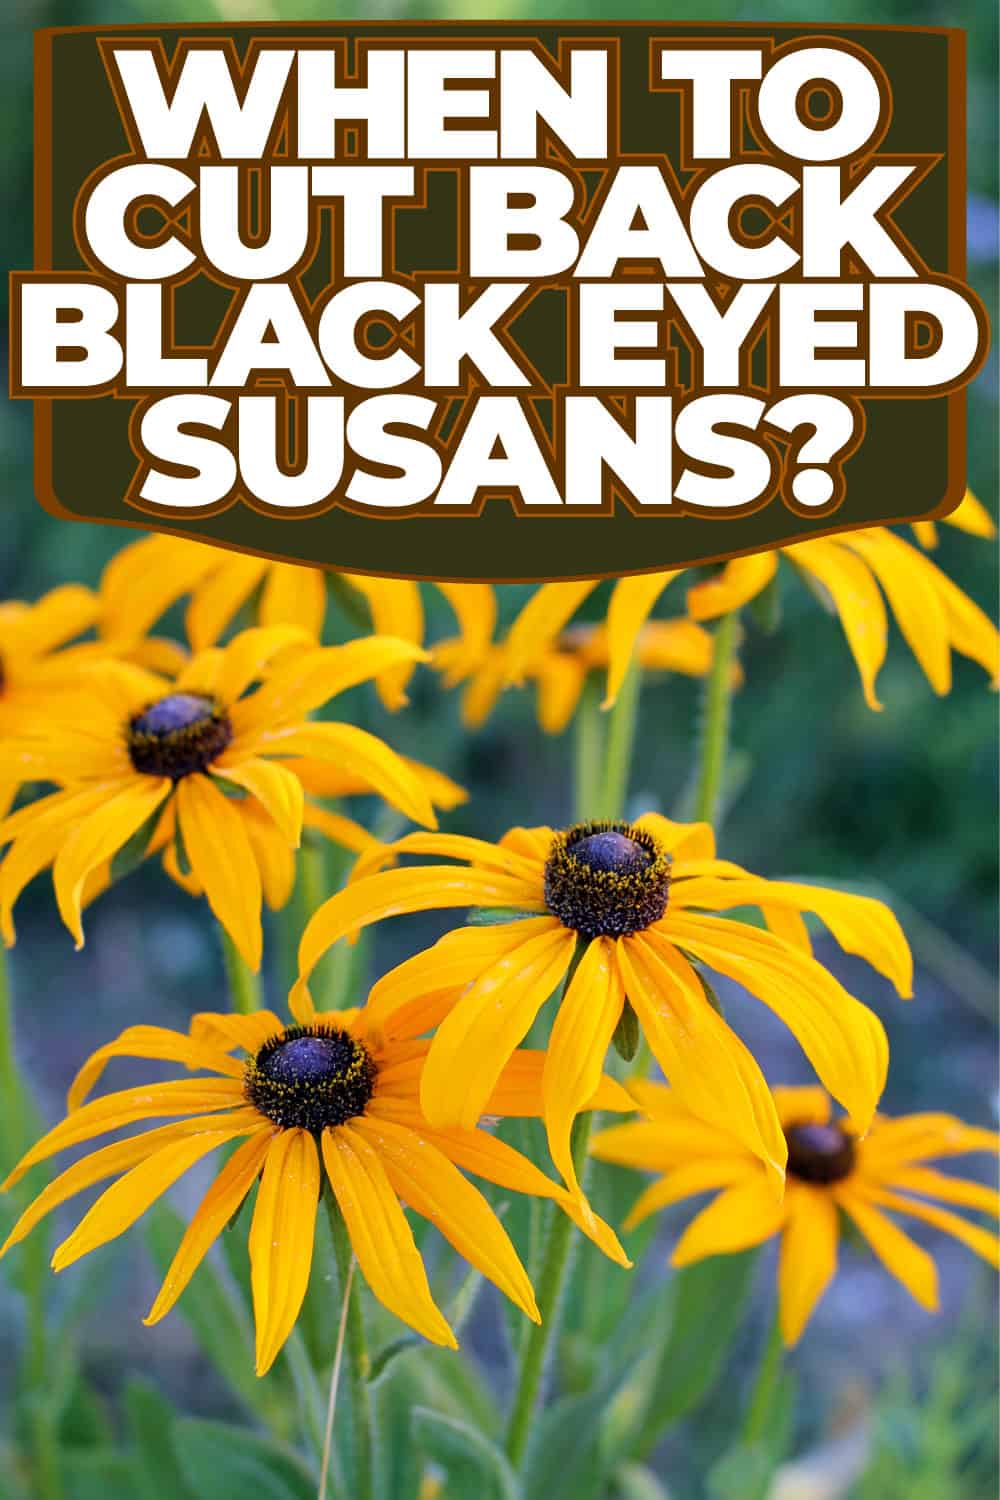 When To Cut Back Black Eyed Susans?